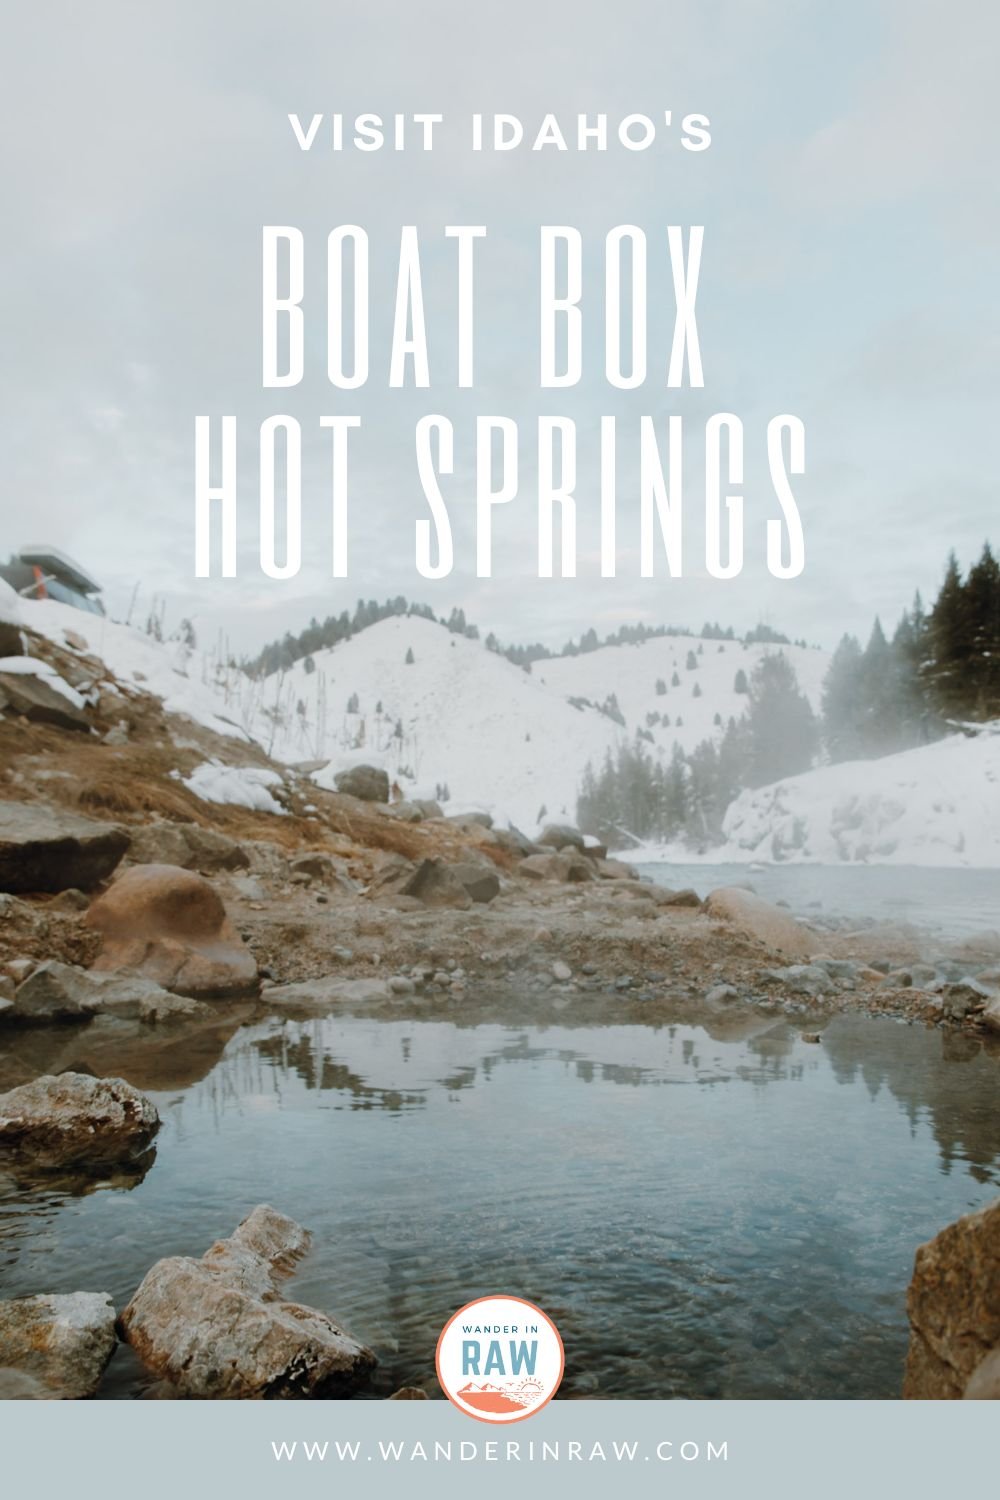 Boat Box Hot Springs